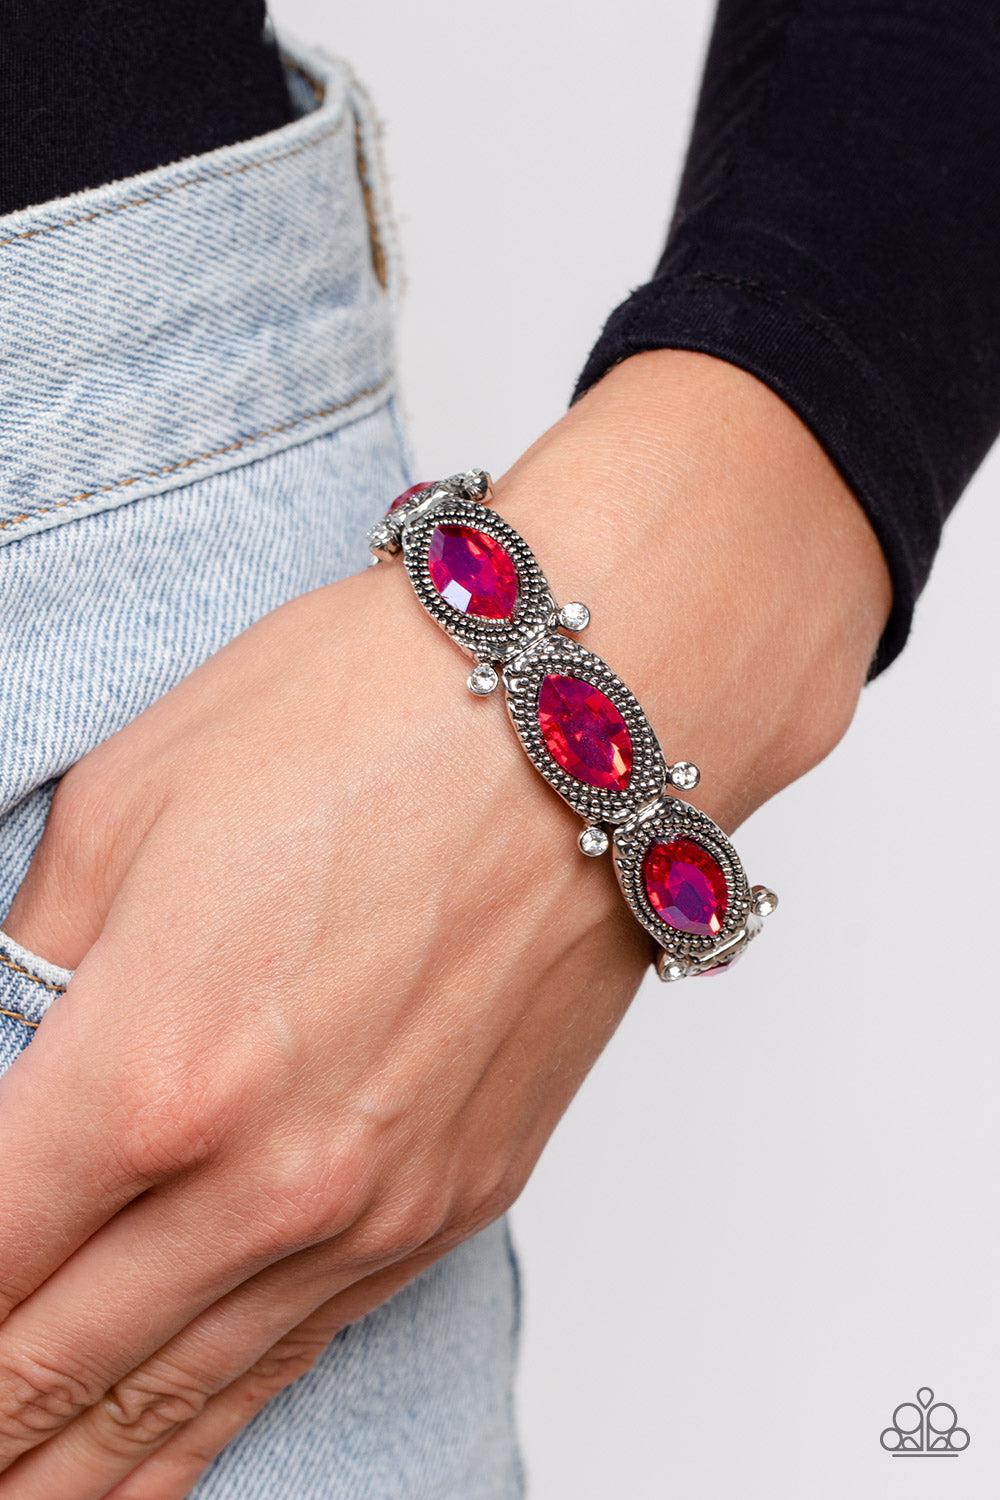 Dancing Diva Pink Rhinestone Bracelet - Paparazzi Accessories-on model - CarasShop.com - $5 Jewelry by Cara Jewels